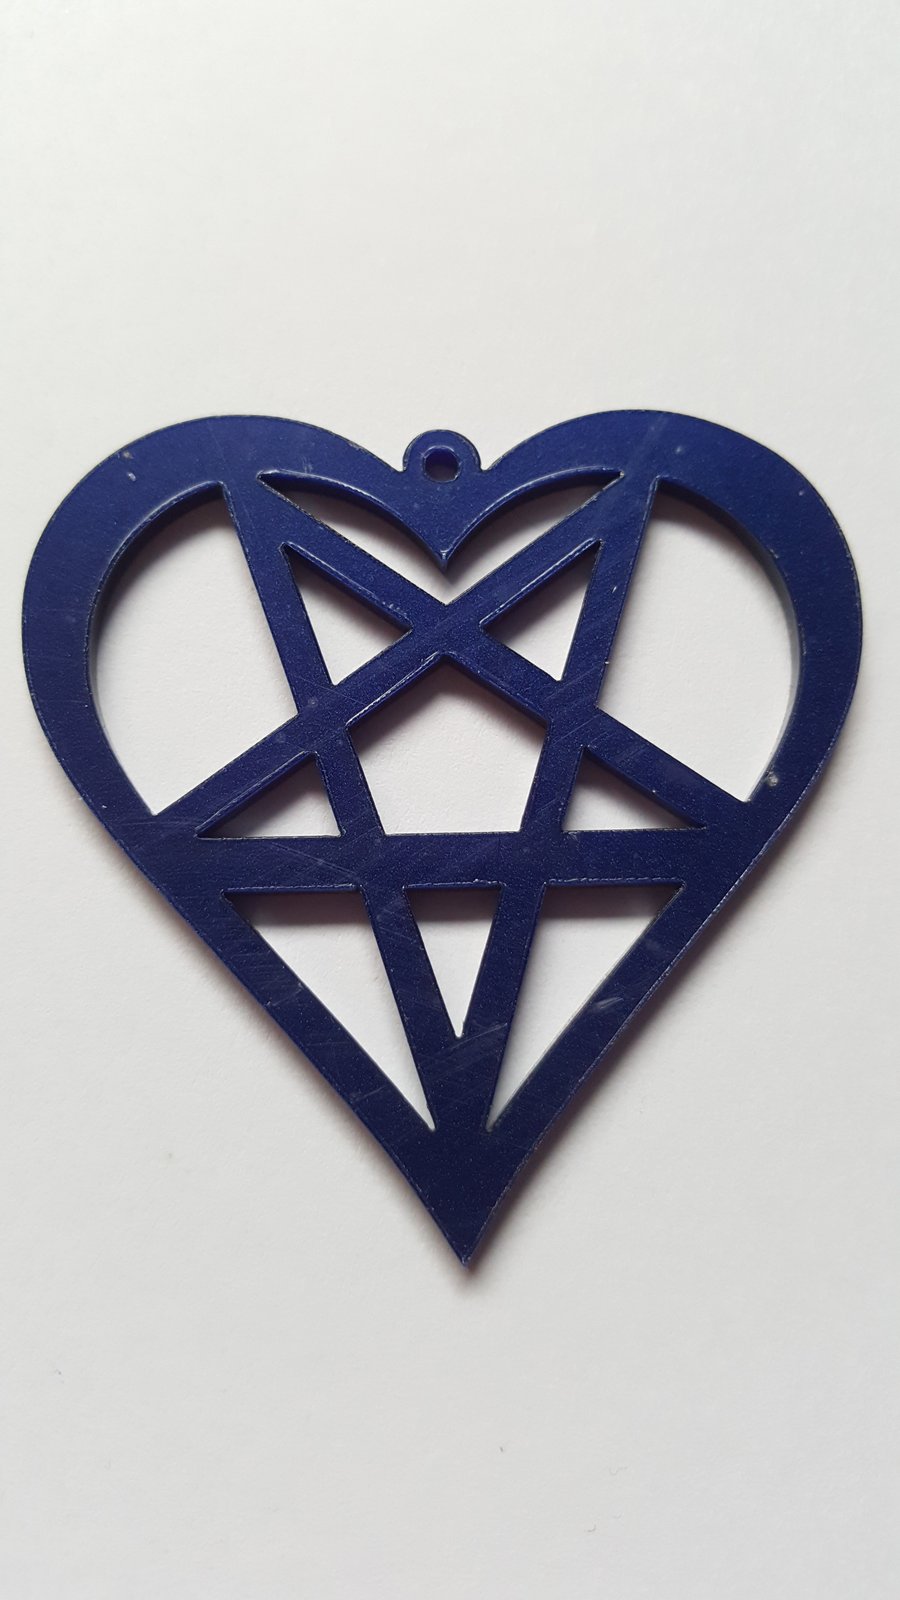 1 x Laser Cut Acrylic Pendant - 50mm - Penta-heart - Dark Blue 